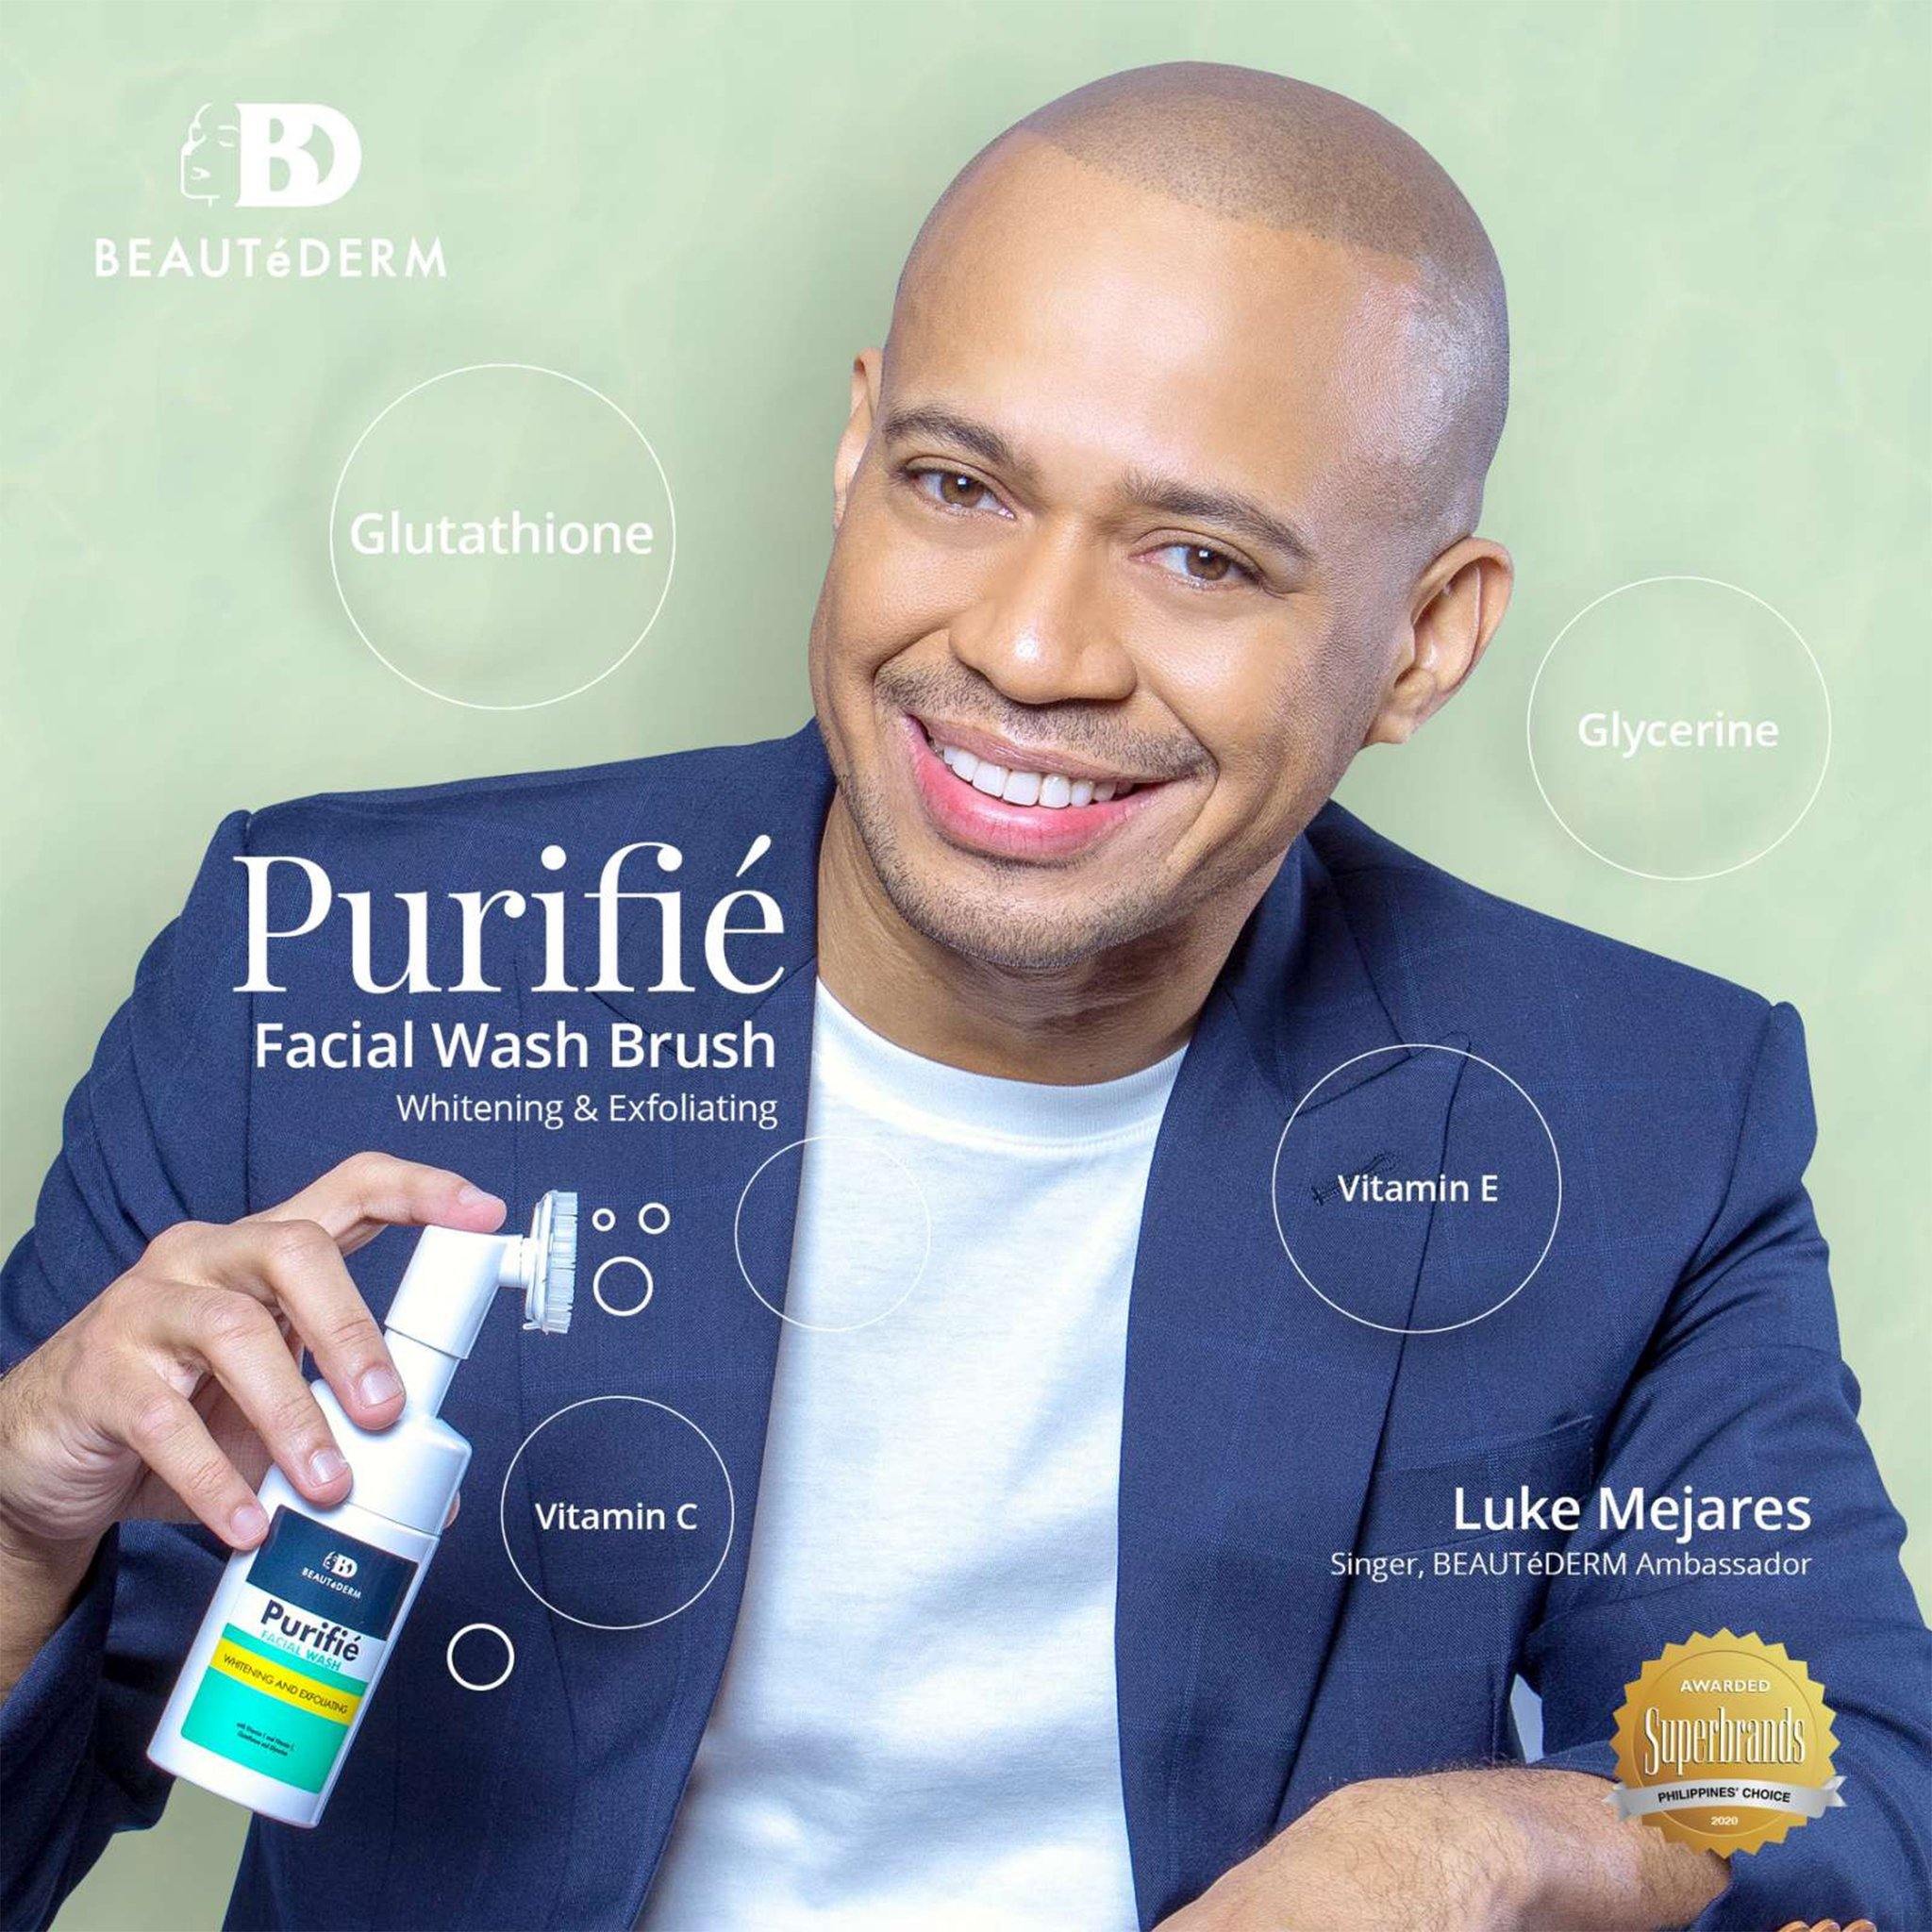 Purifie Facial Wash with Brush, Whitening & Exfoliating, 100ml, by Beautederm,  with Luke Mejares (Beautederm Ambassador)